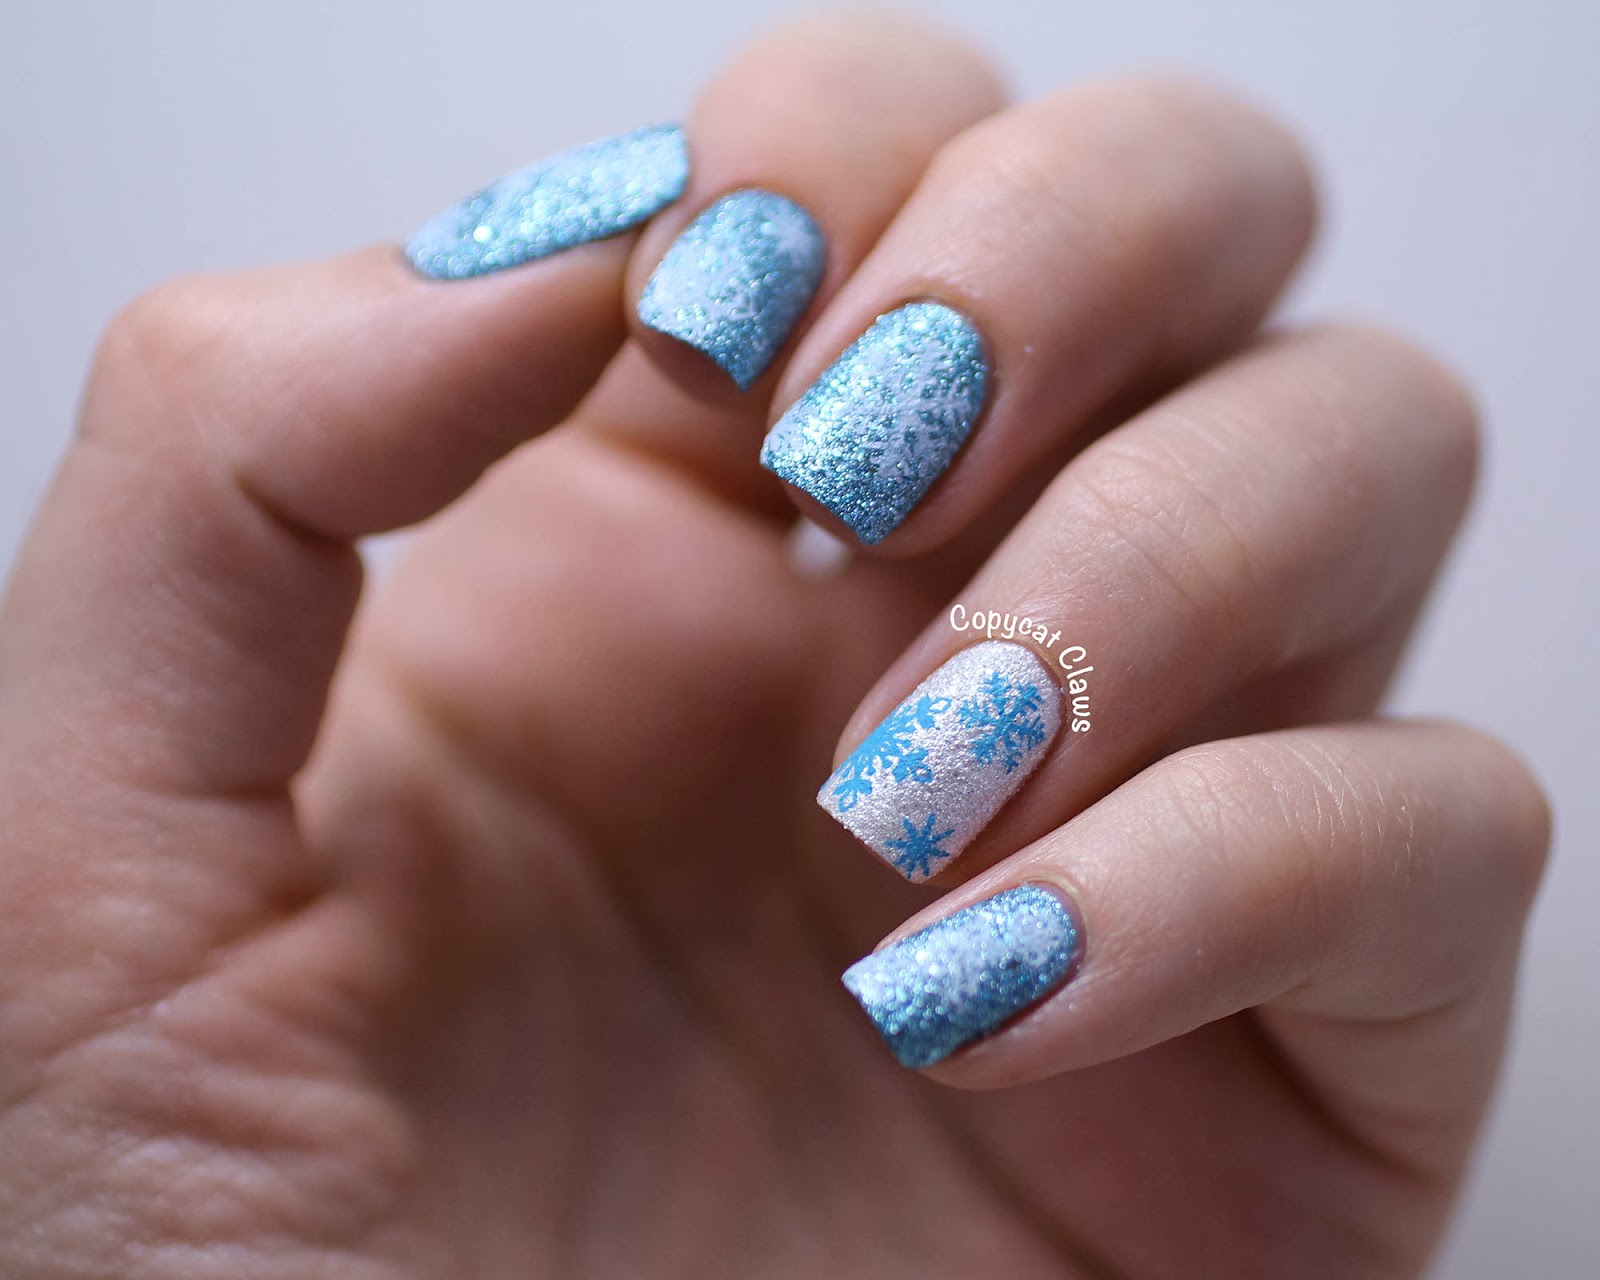 2. 25+ Best Snowflake Nail Art Designs on Pinterest - wide 1